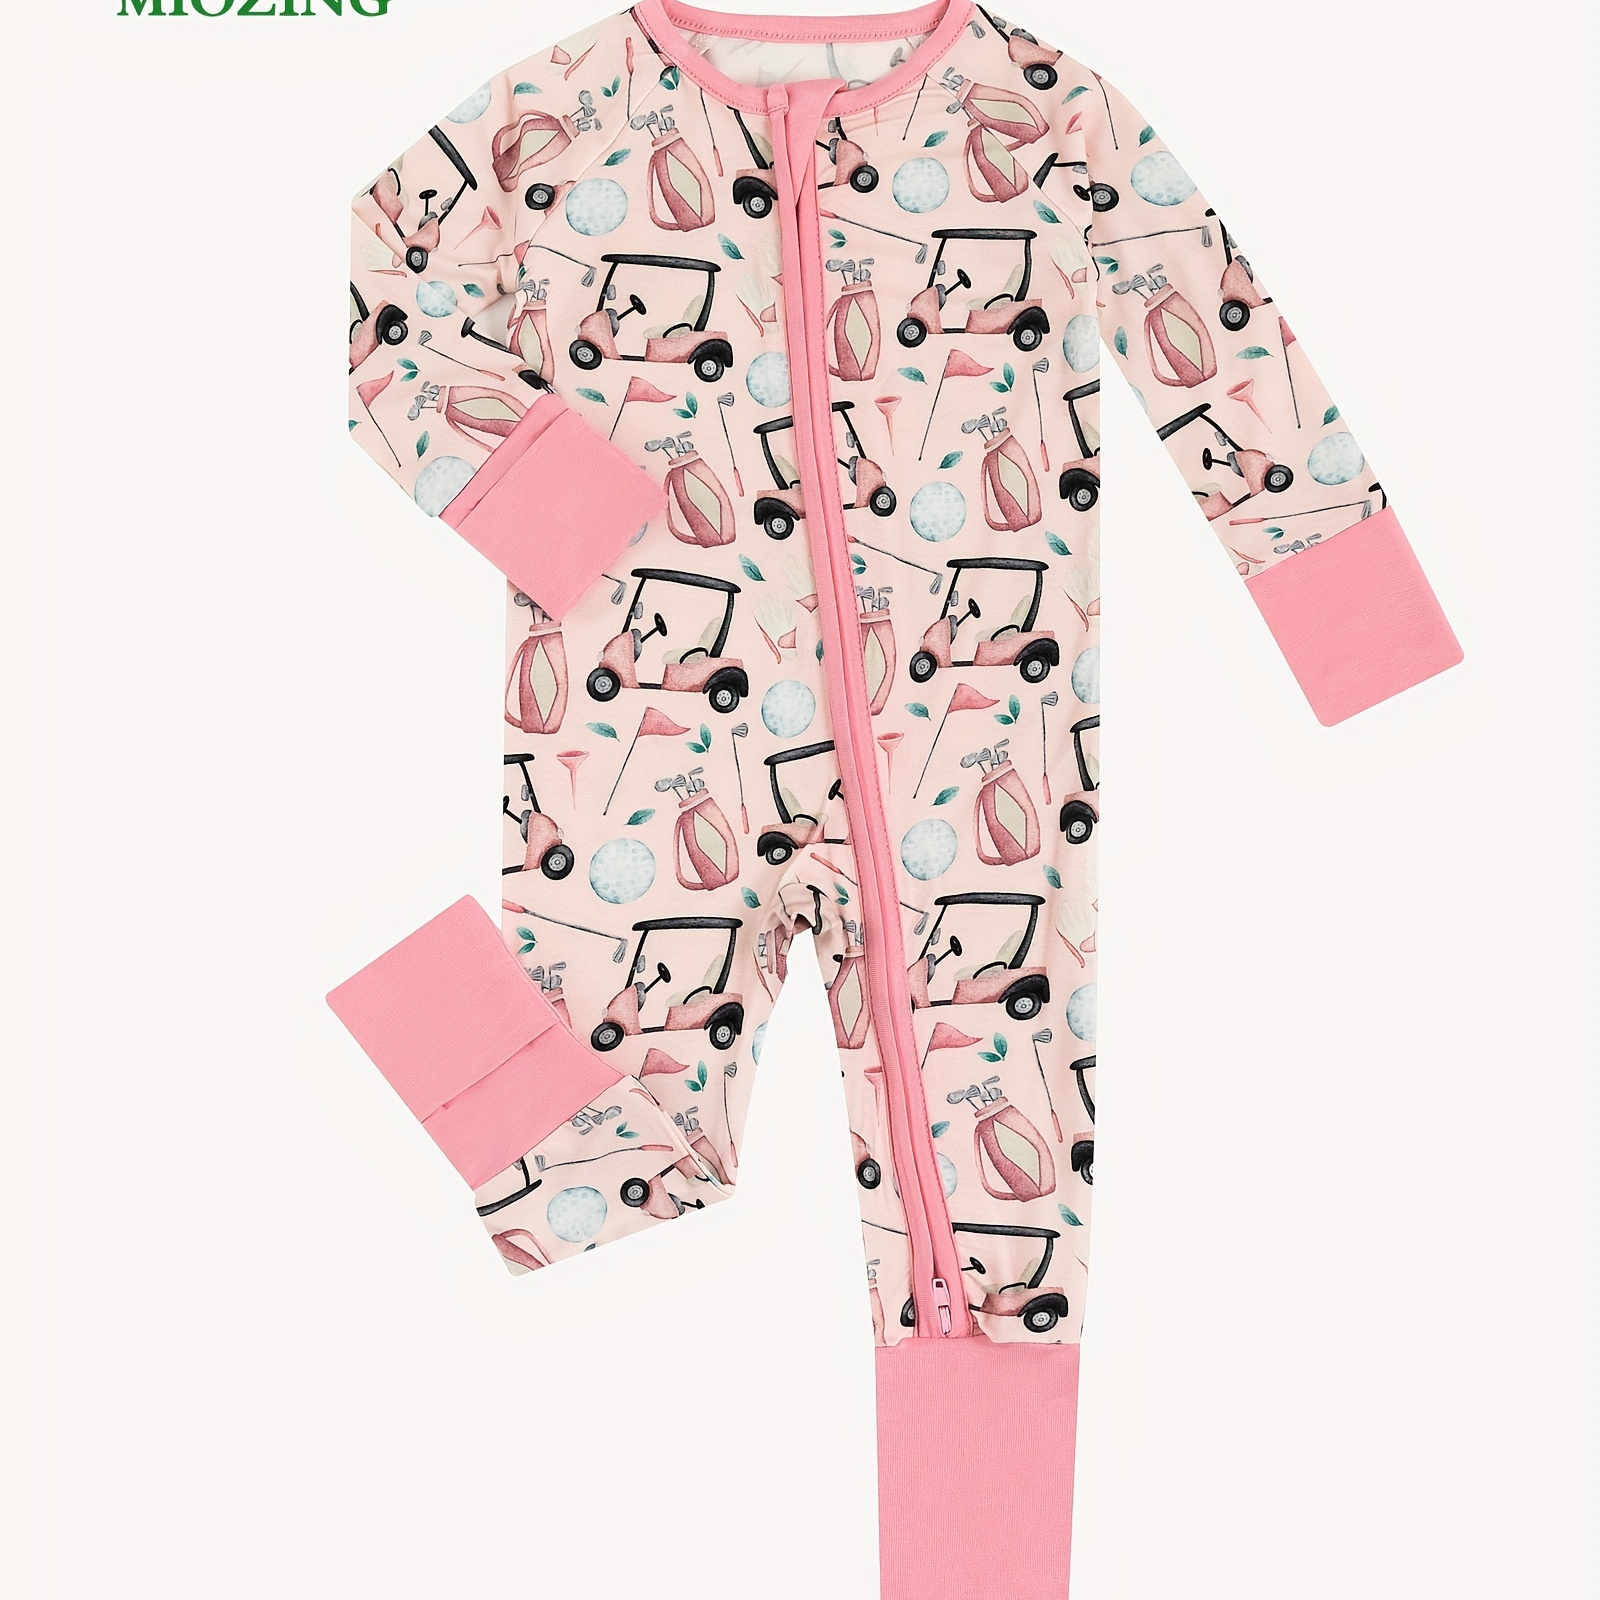 

Miozing Bamboo Fiber Bodysuit For Baby, Cartoon Golf Elements Pattern Long Sleeve Onesie, Infant & Toddler Girl's Romper